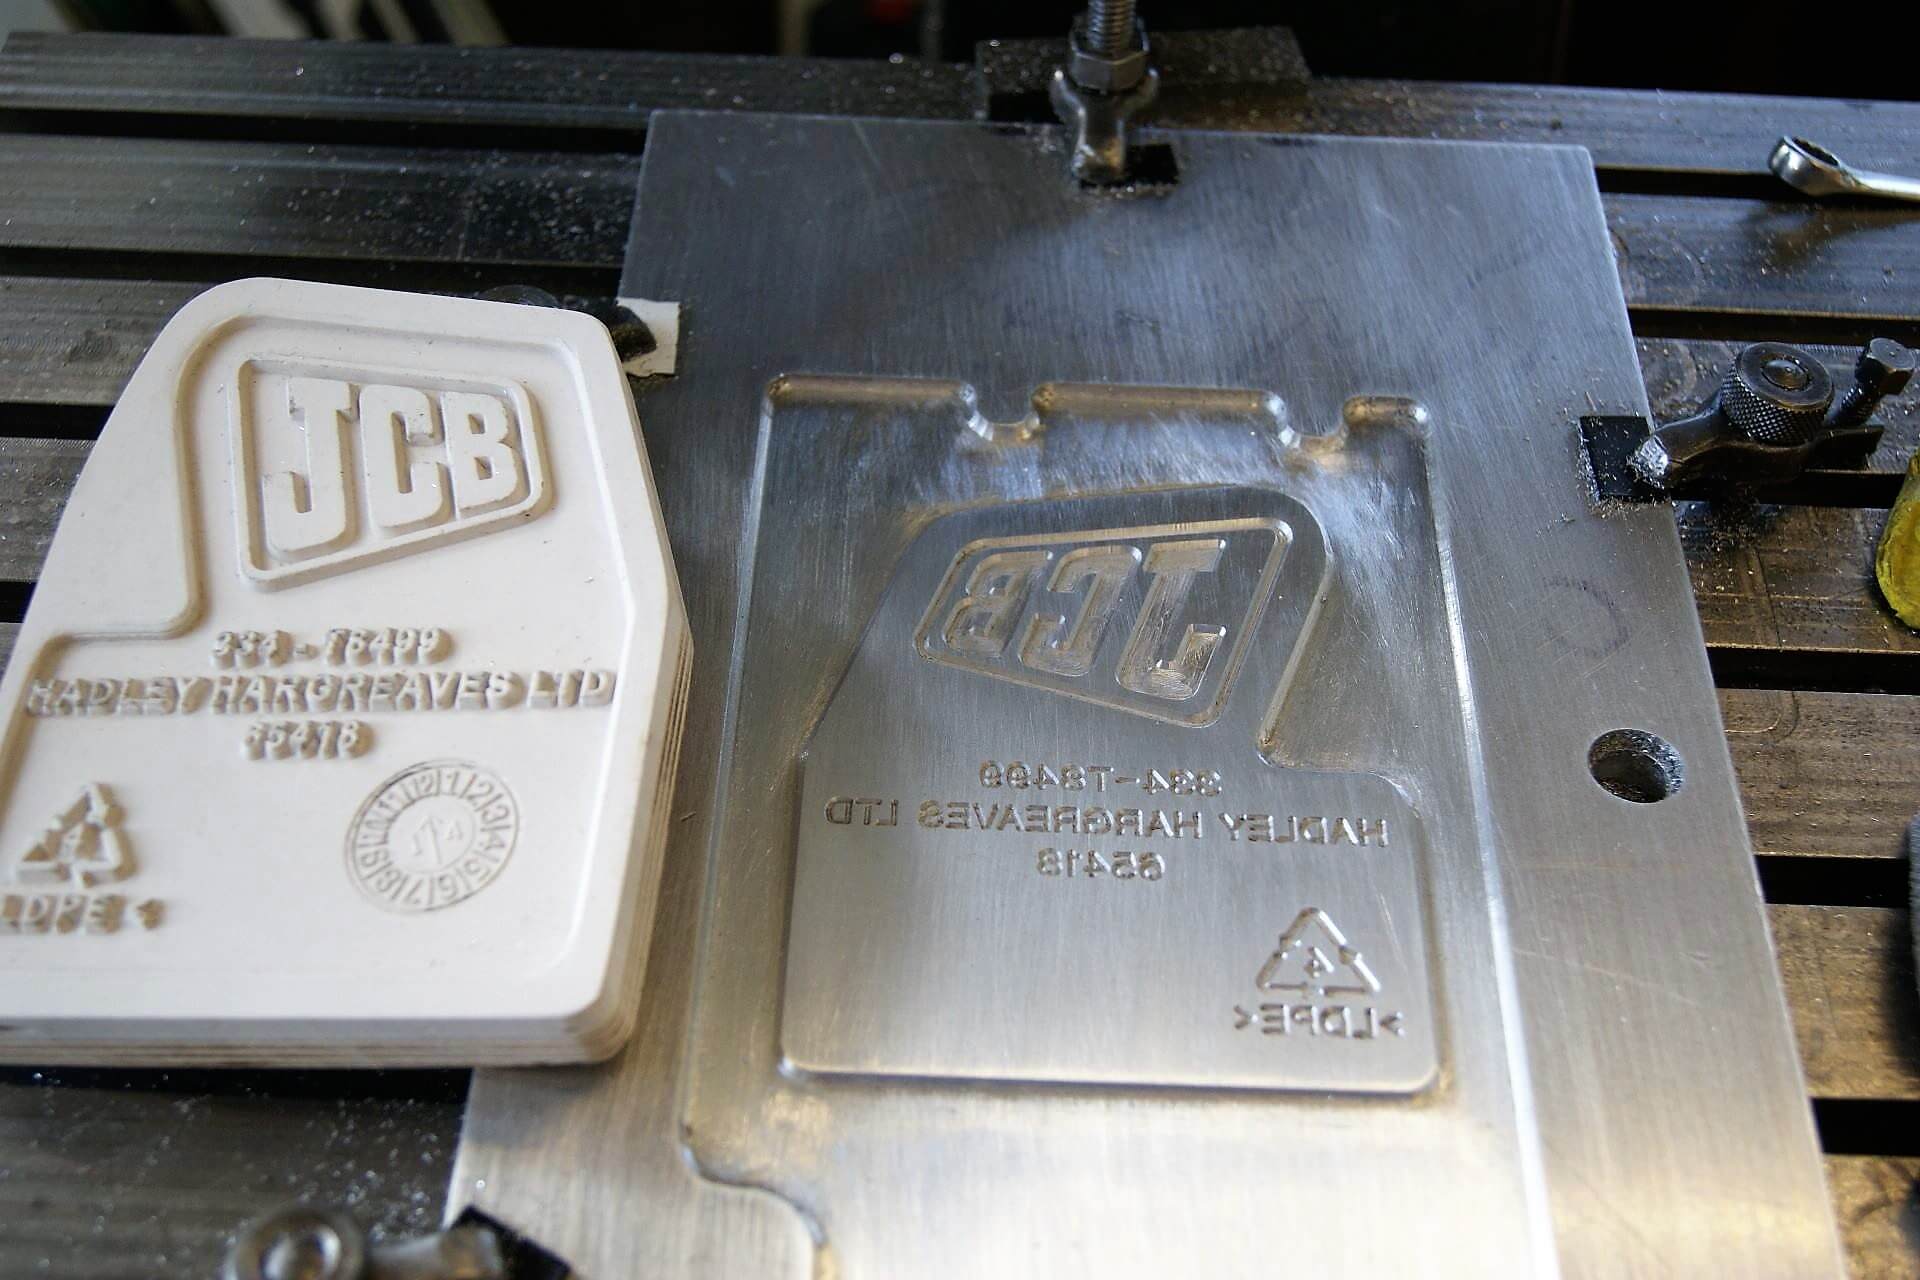 JCB engraved injection moulding tool